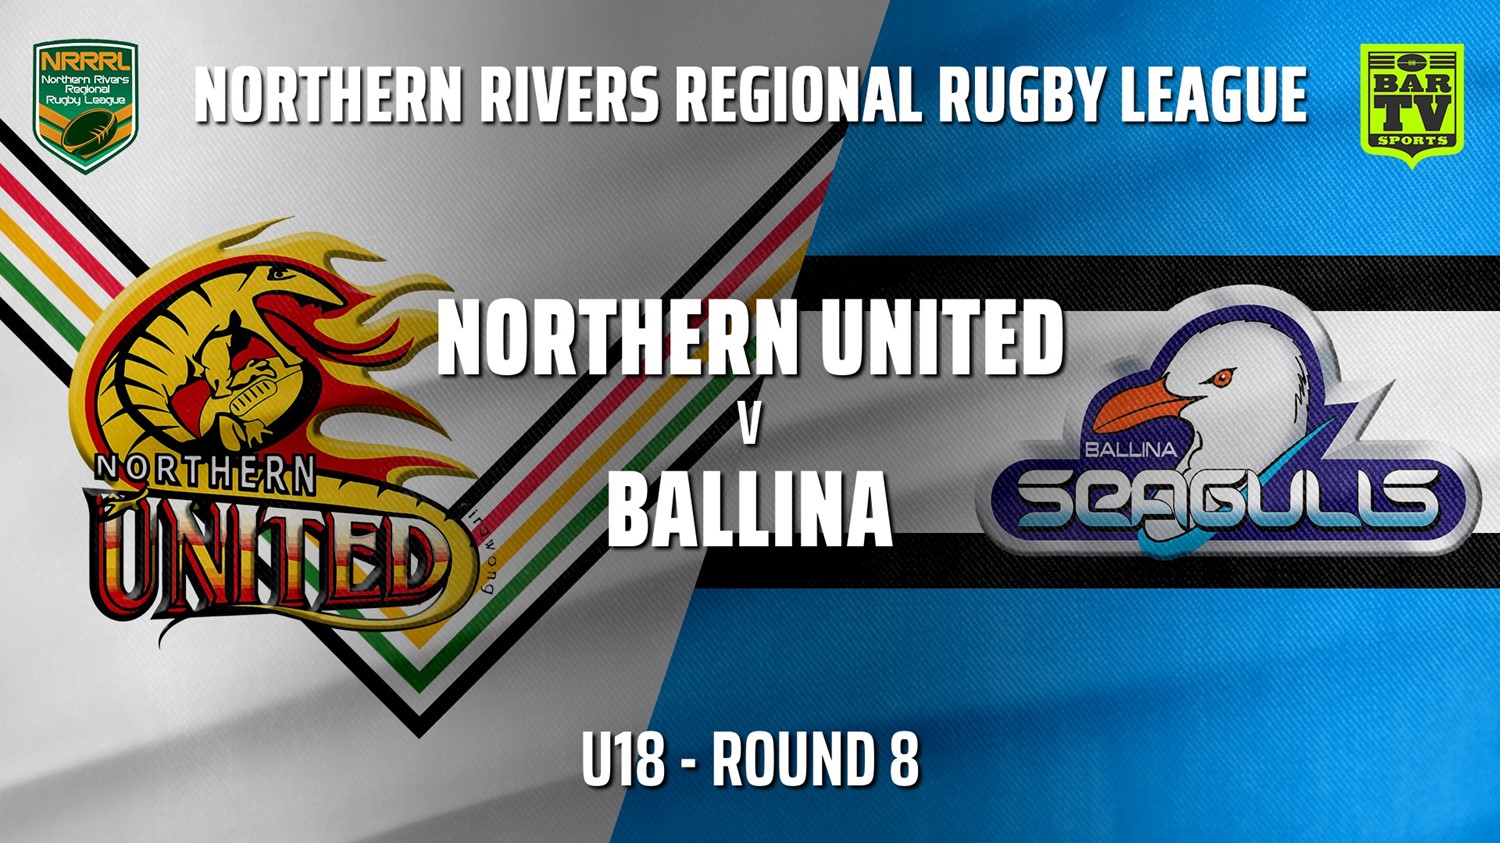 210627-Northern Rivers Round 8 - U18 - Northern United v Ballina Seagulls Slate Image